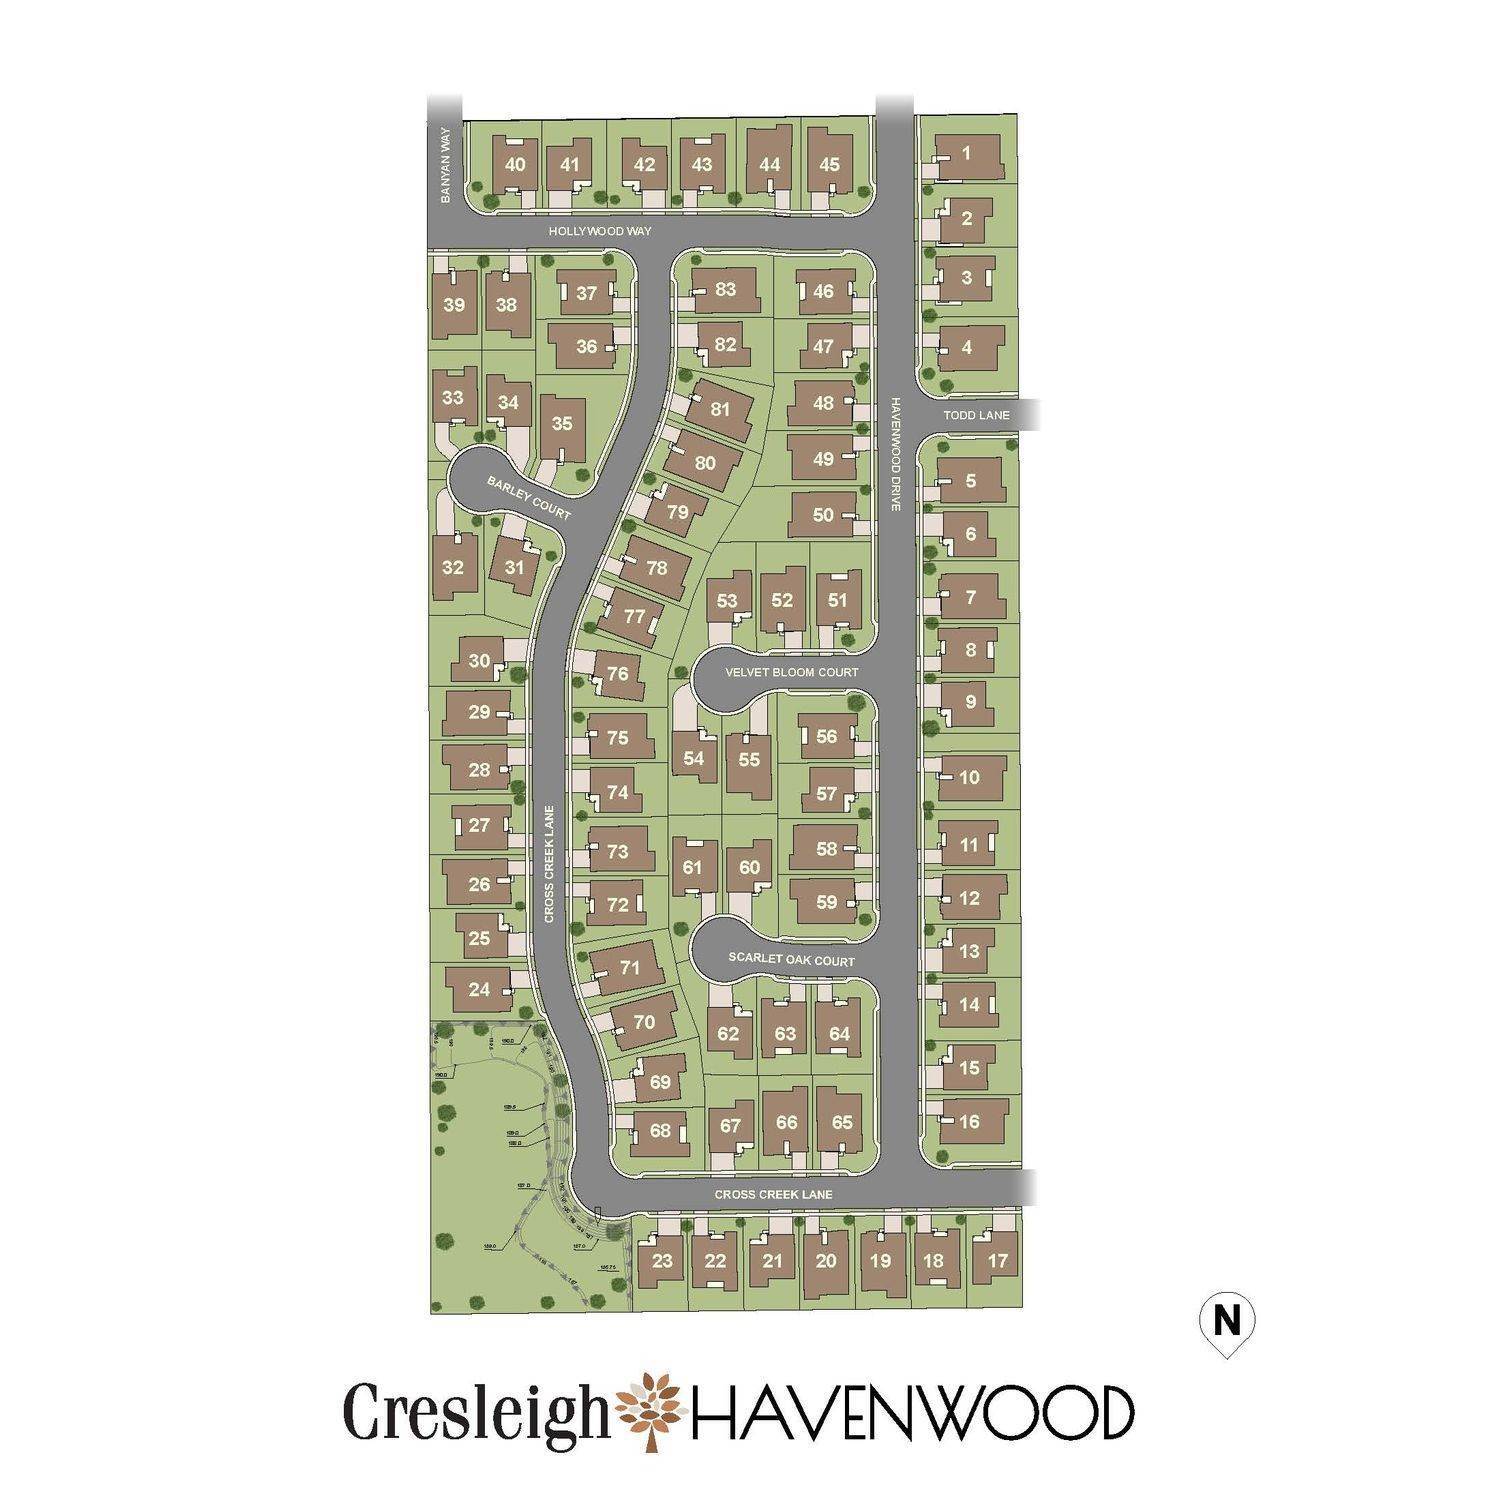 2. Cresleigh Havenwood building at 758 Havenwood Drive, Lincoln, CA 95648